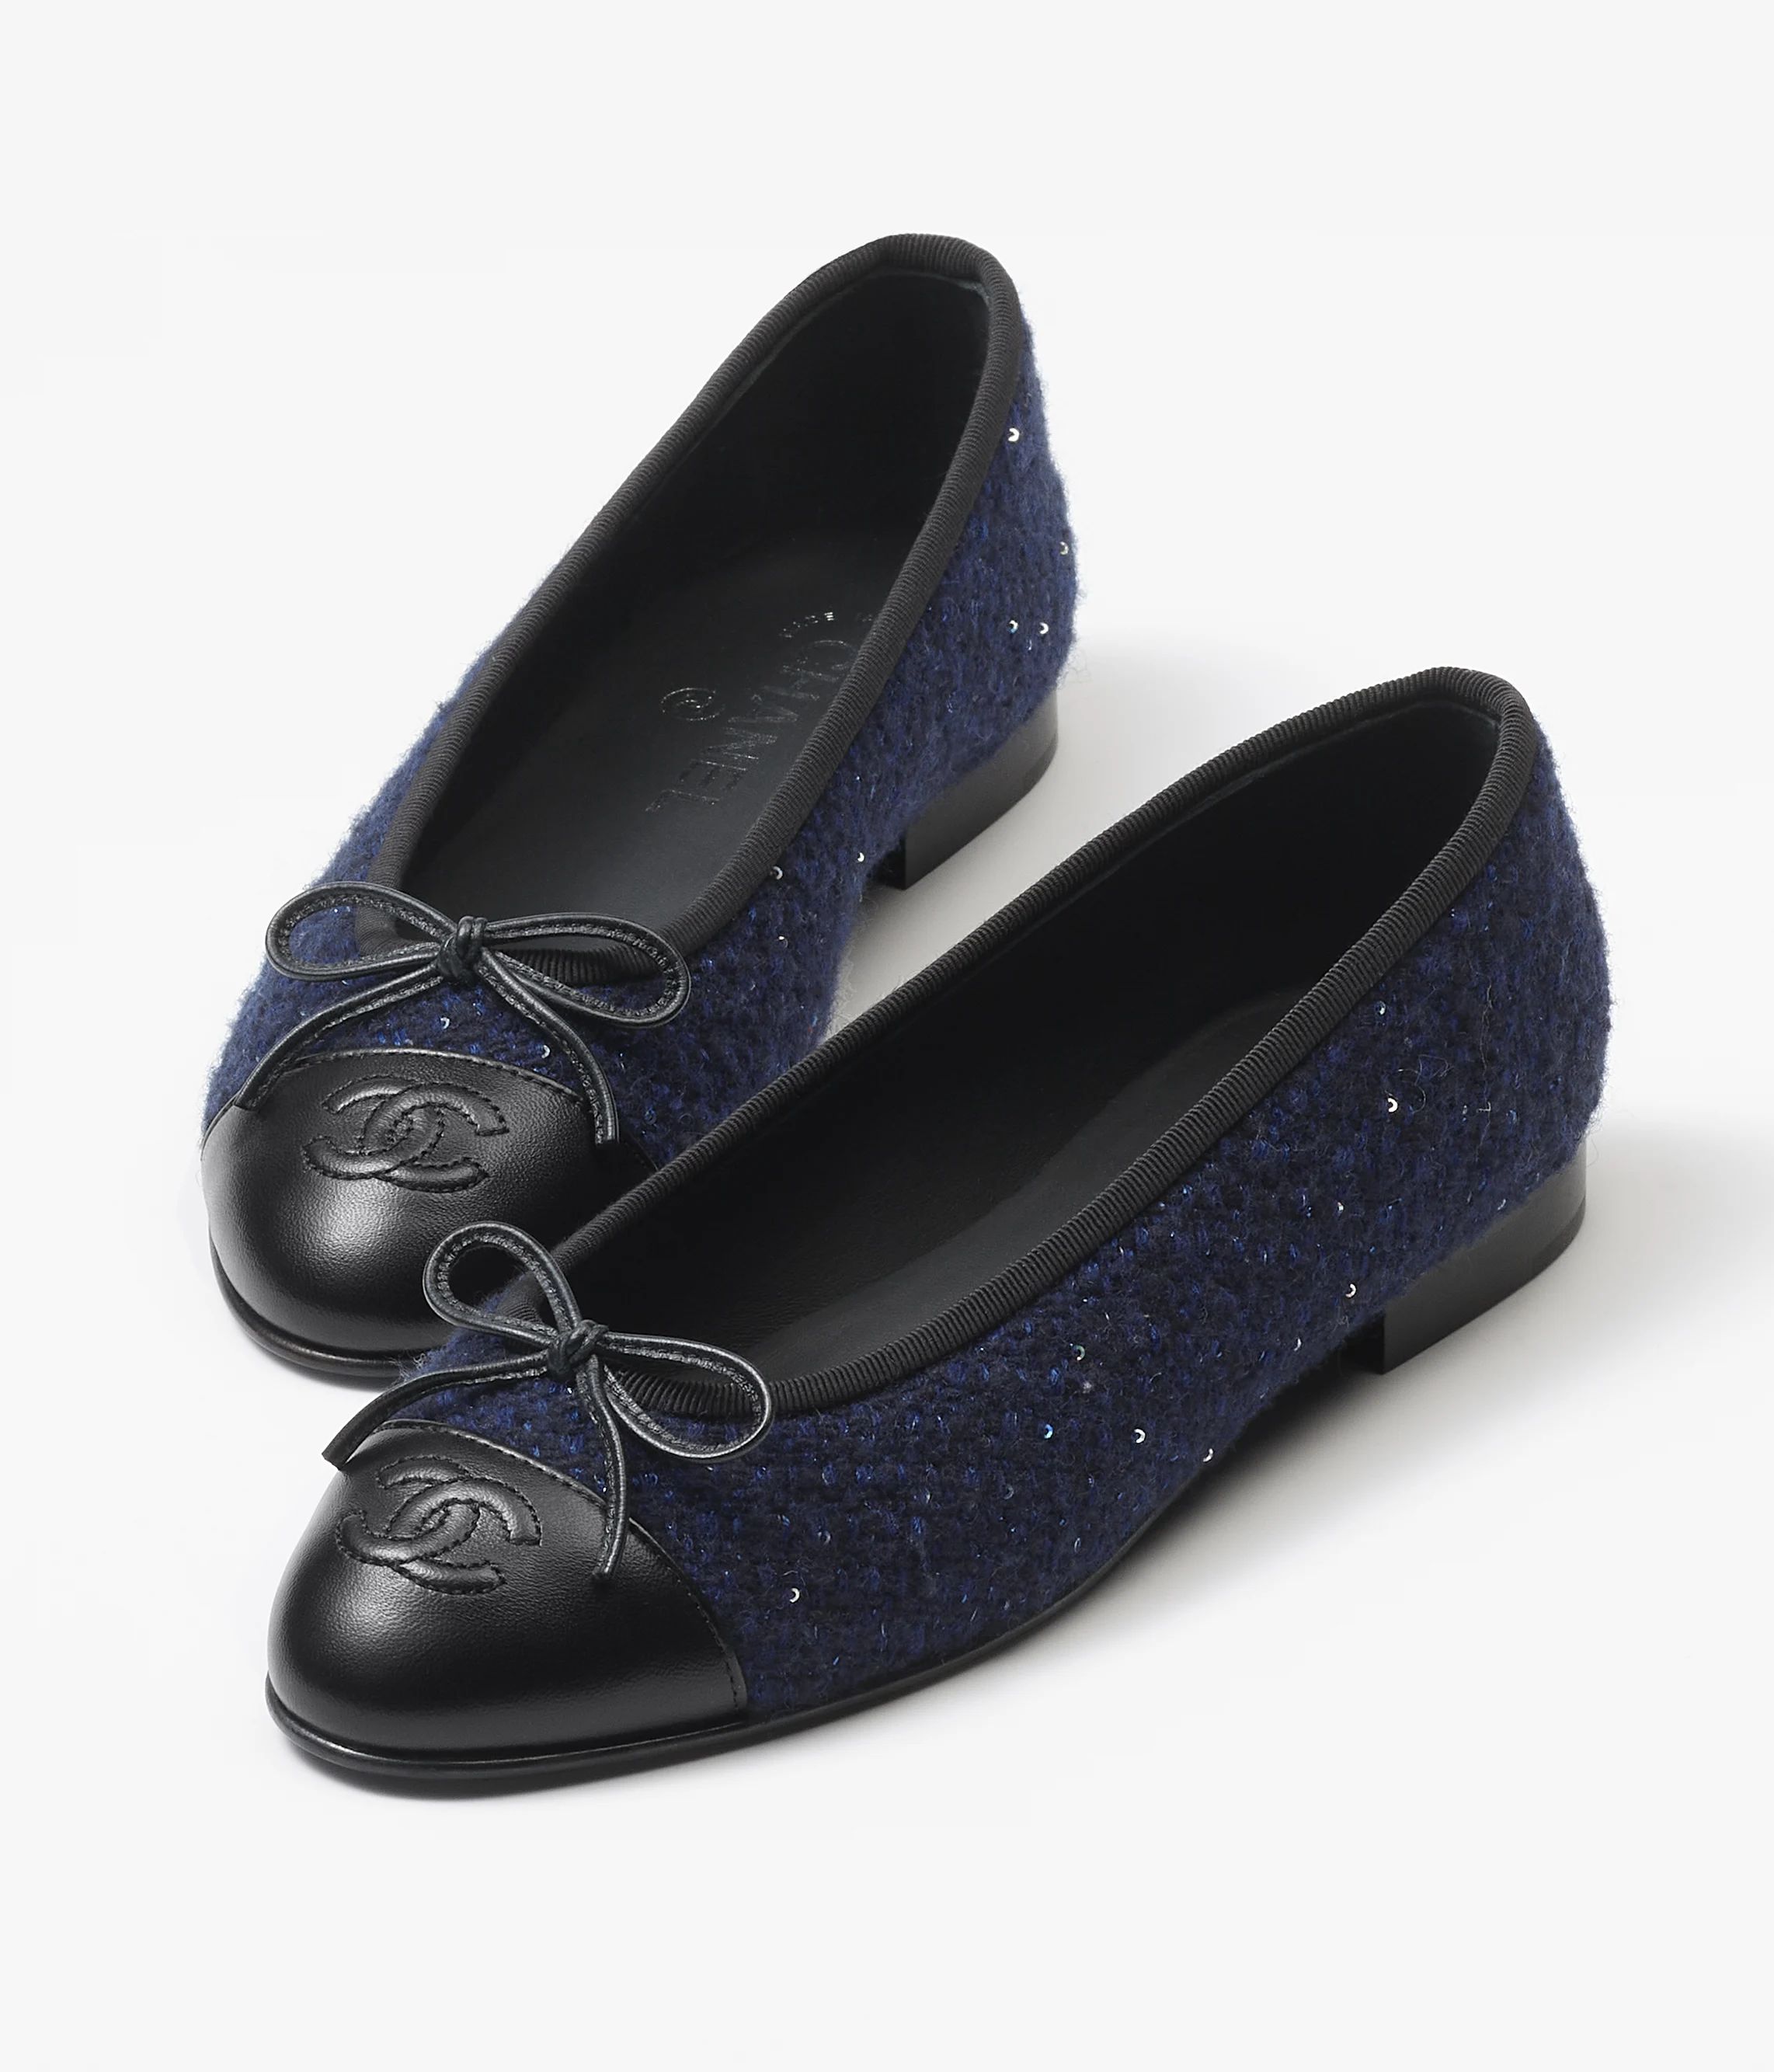 Ballet flats - Wool tweed & lambskin, navy blue, blue & black — Fashion | CHANEL | Chanel, Inc. (US)